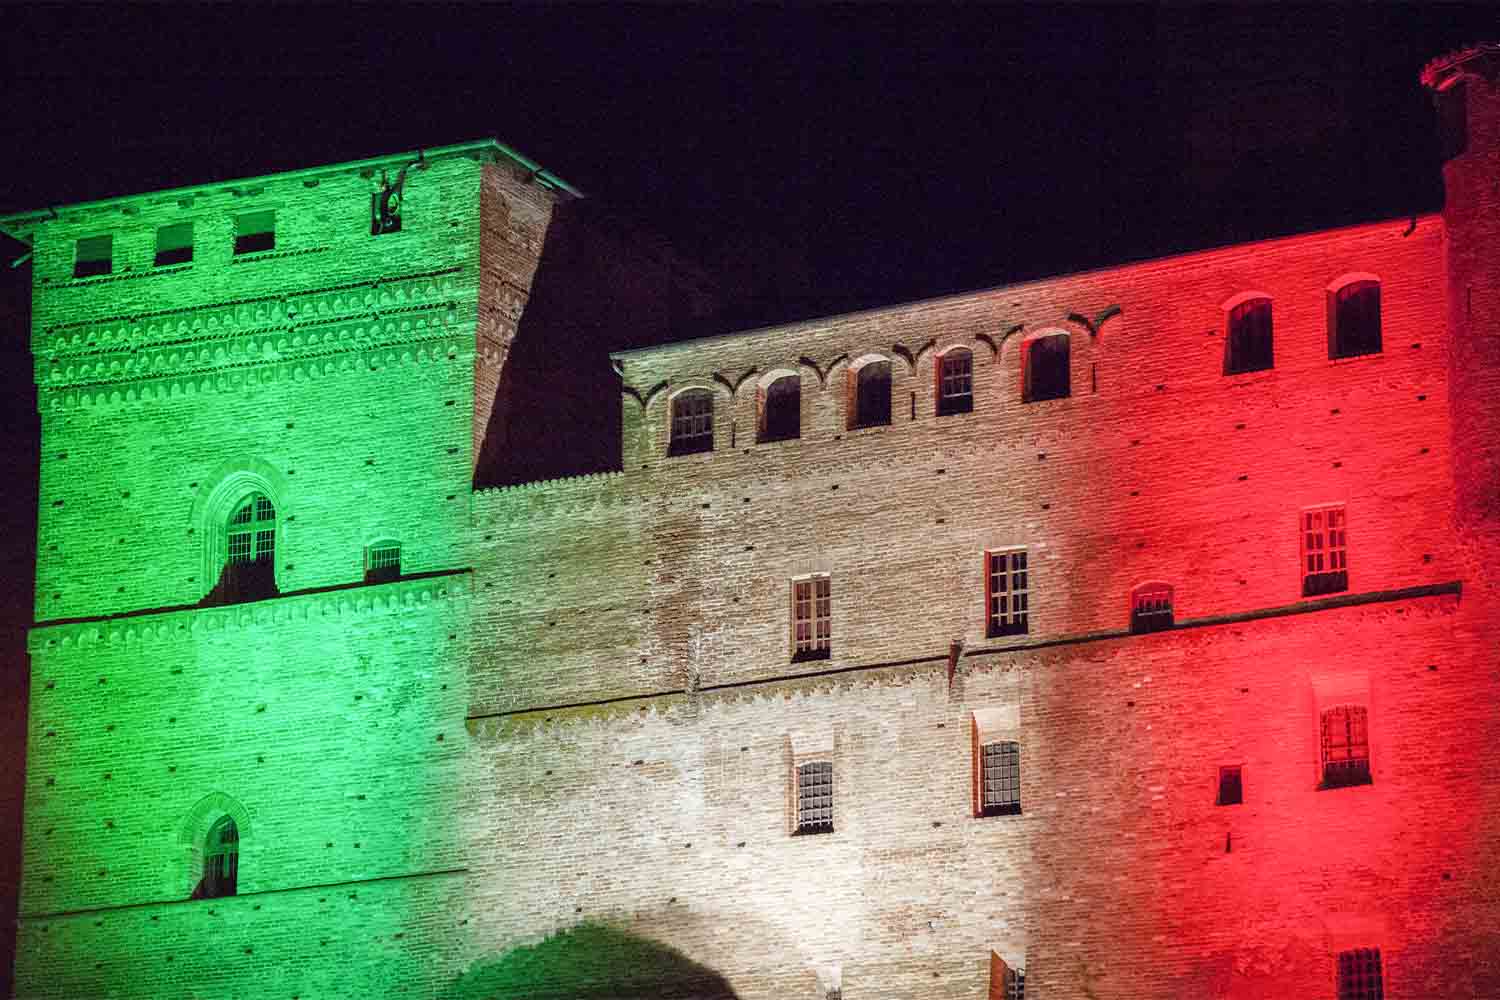 Piedmont castle at night